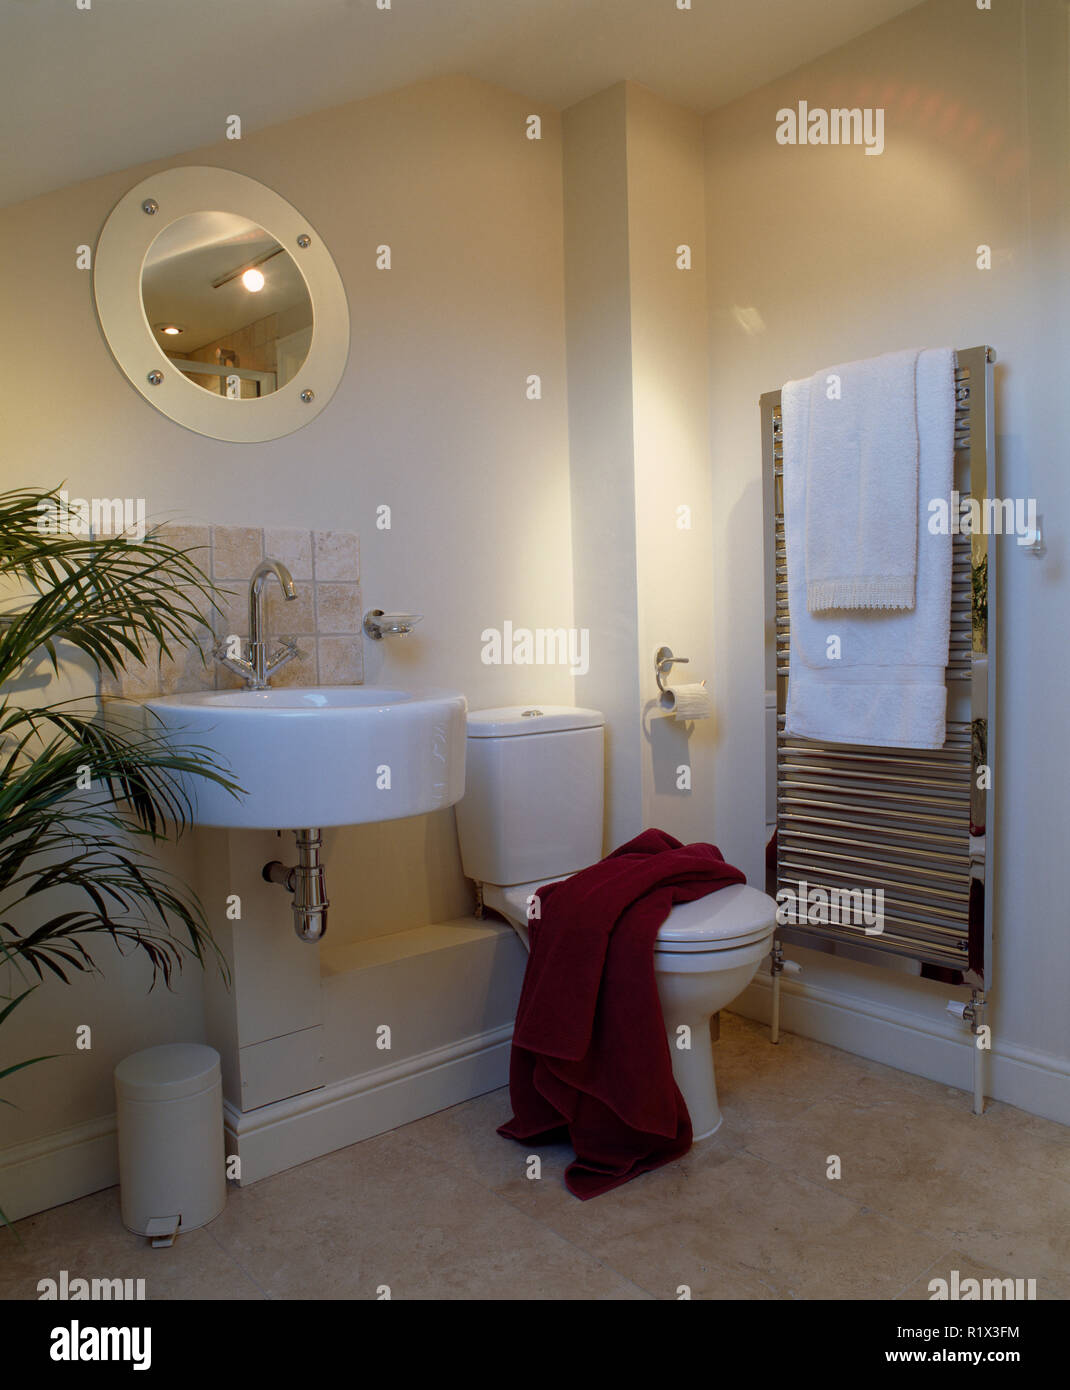 Circular basin in modern bathroom with heated towel rail Stock Photo